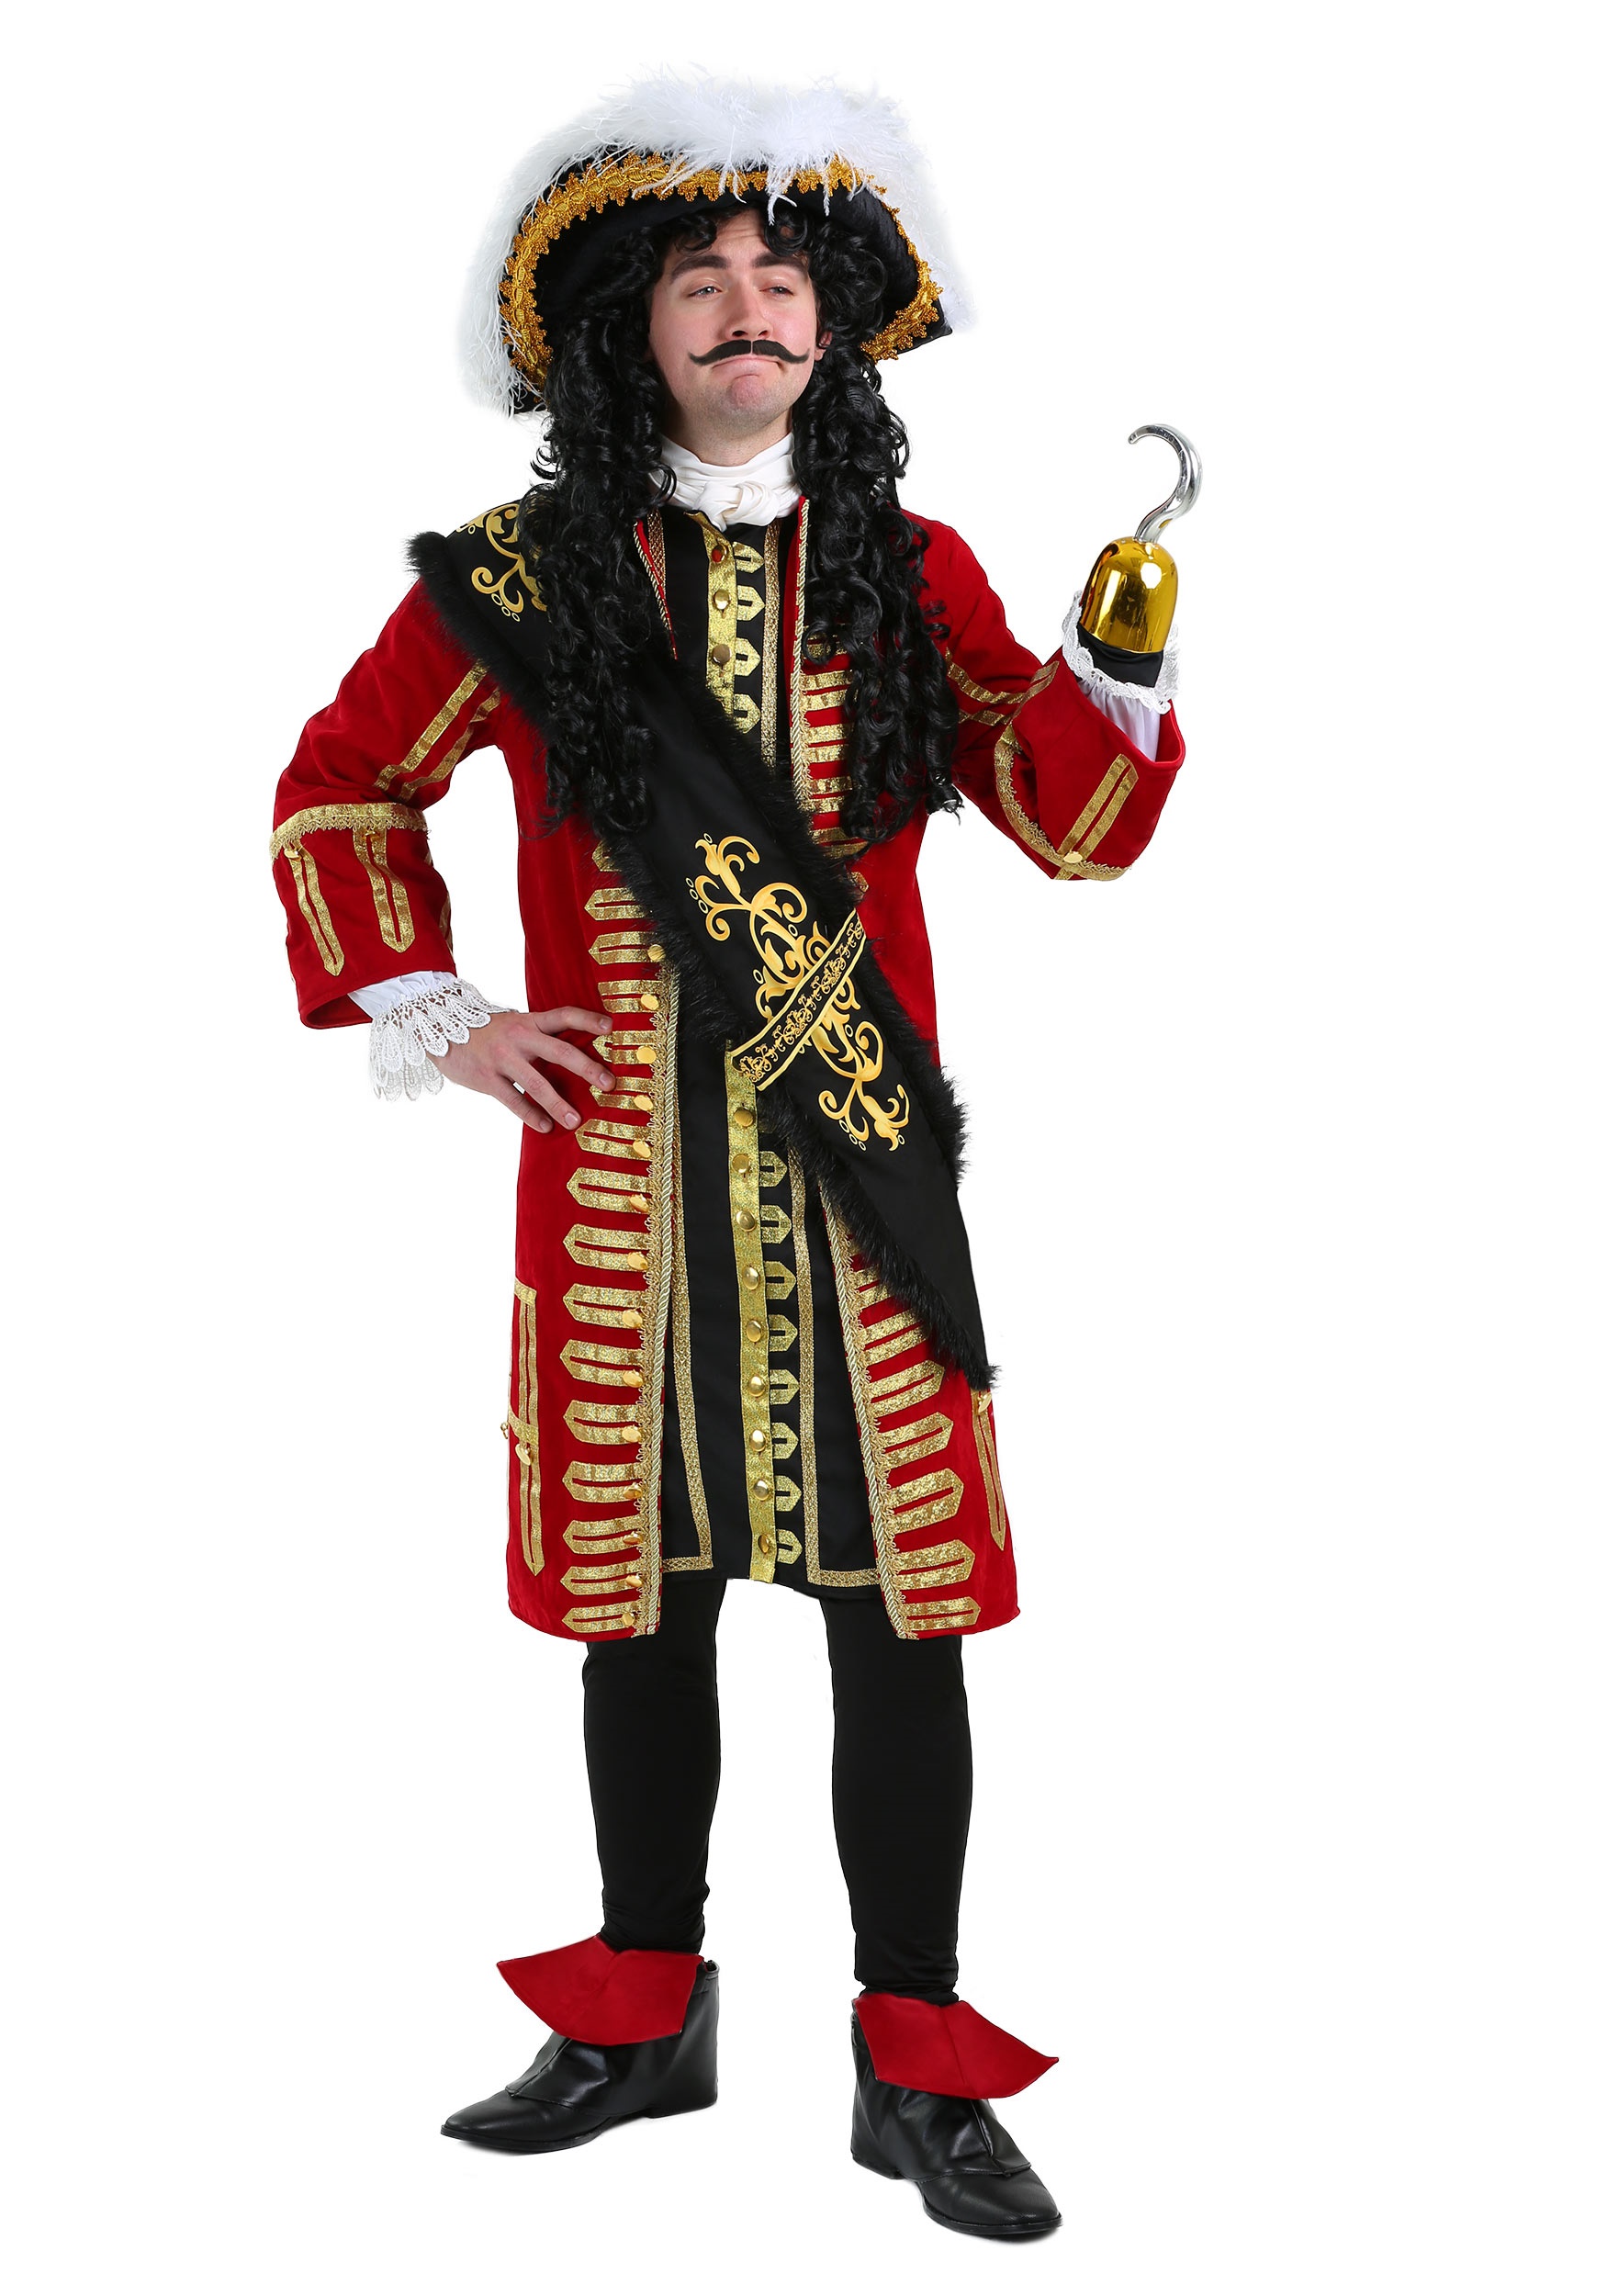 Photos - Fancy Dress Elite FUN Costumes  Captain Hook Costume for Men | Pirate Costumes Black 